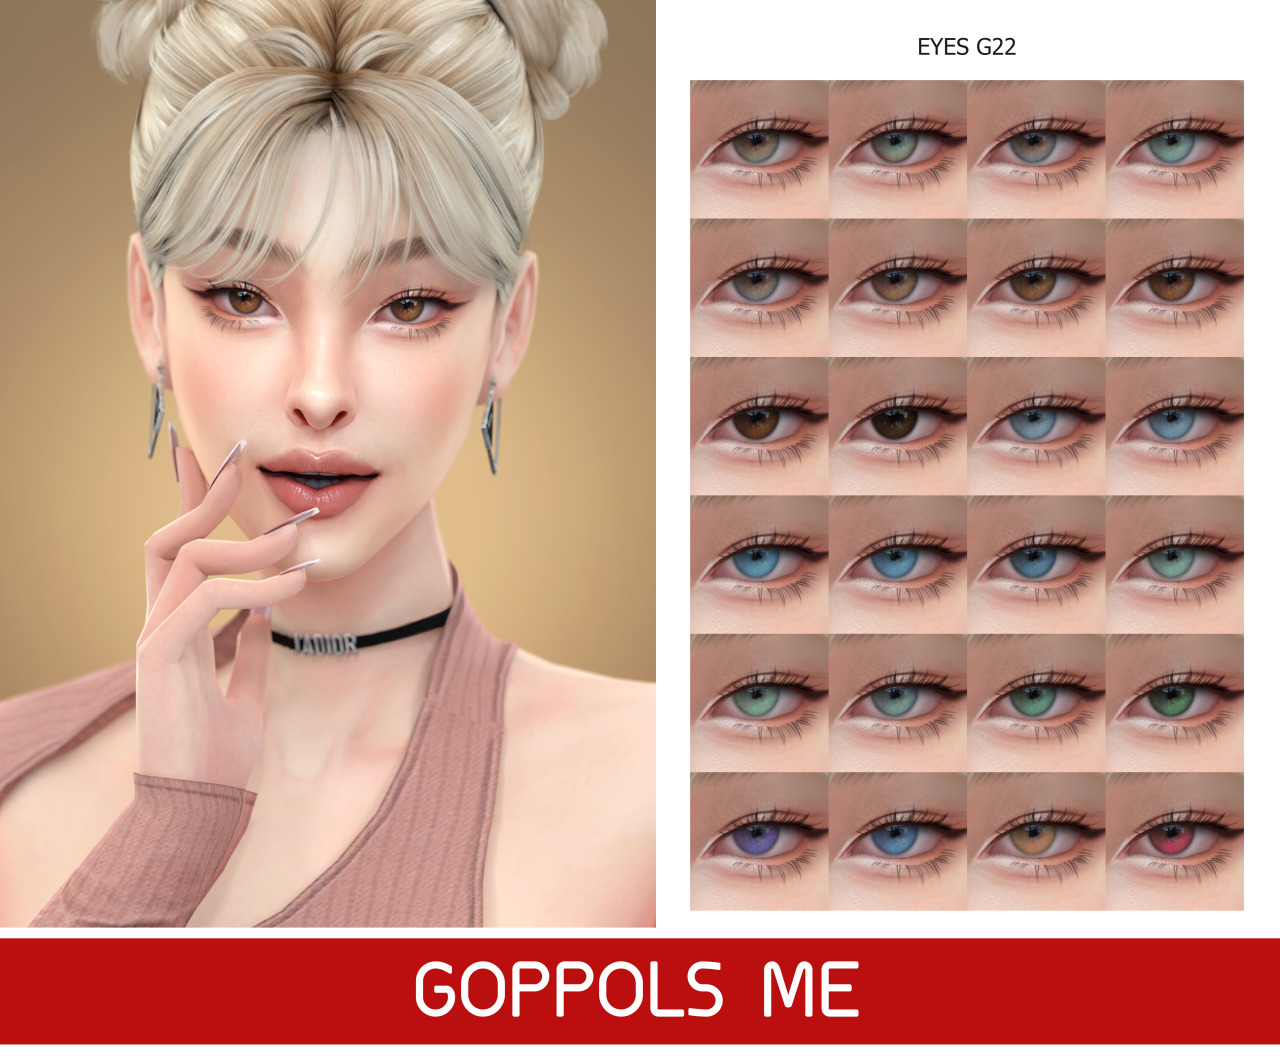 Sims 4 Updates: Eyes: GPME-GOLD Eyes G22 - GOPPOLS Me. 